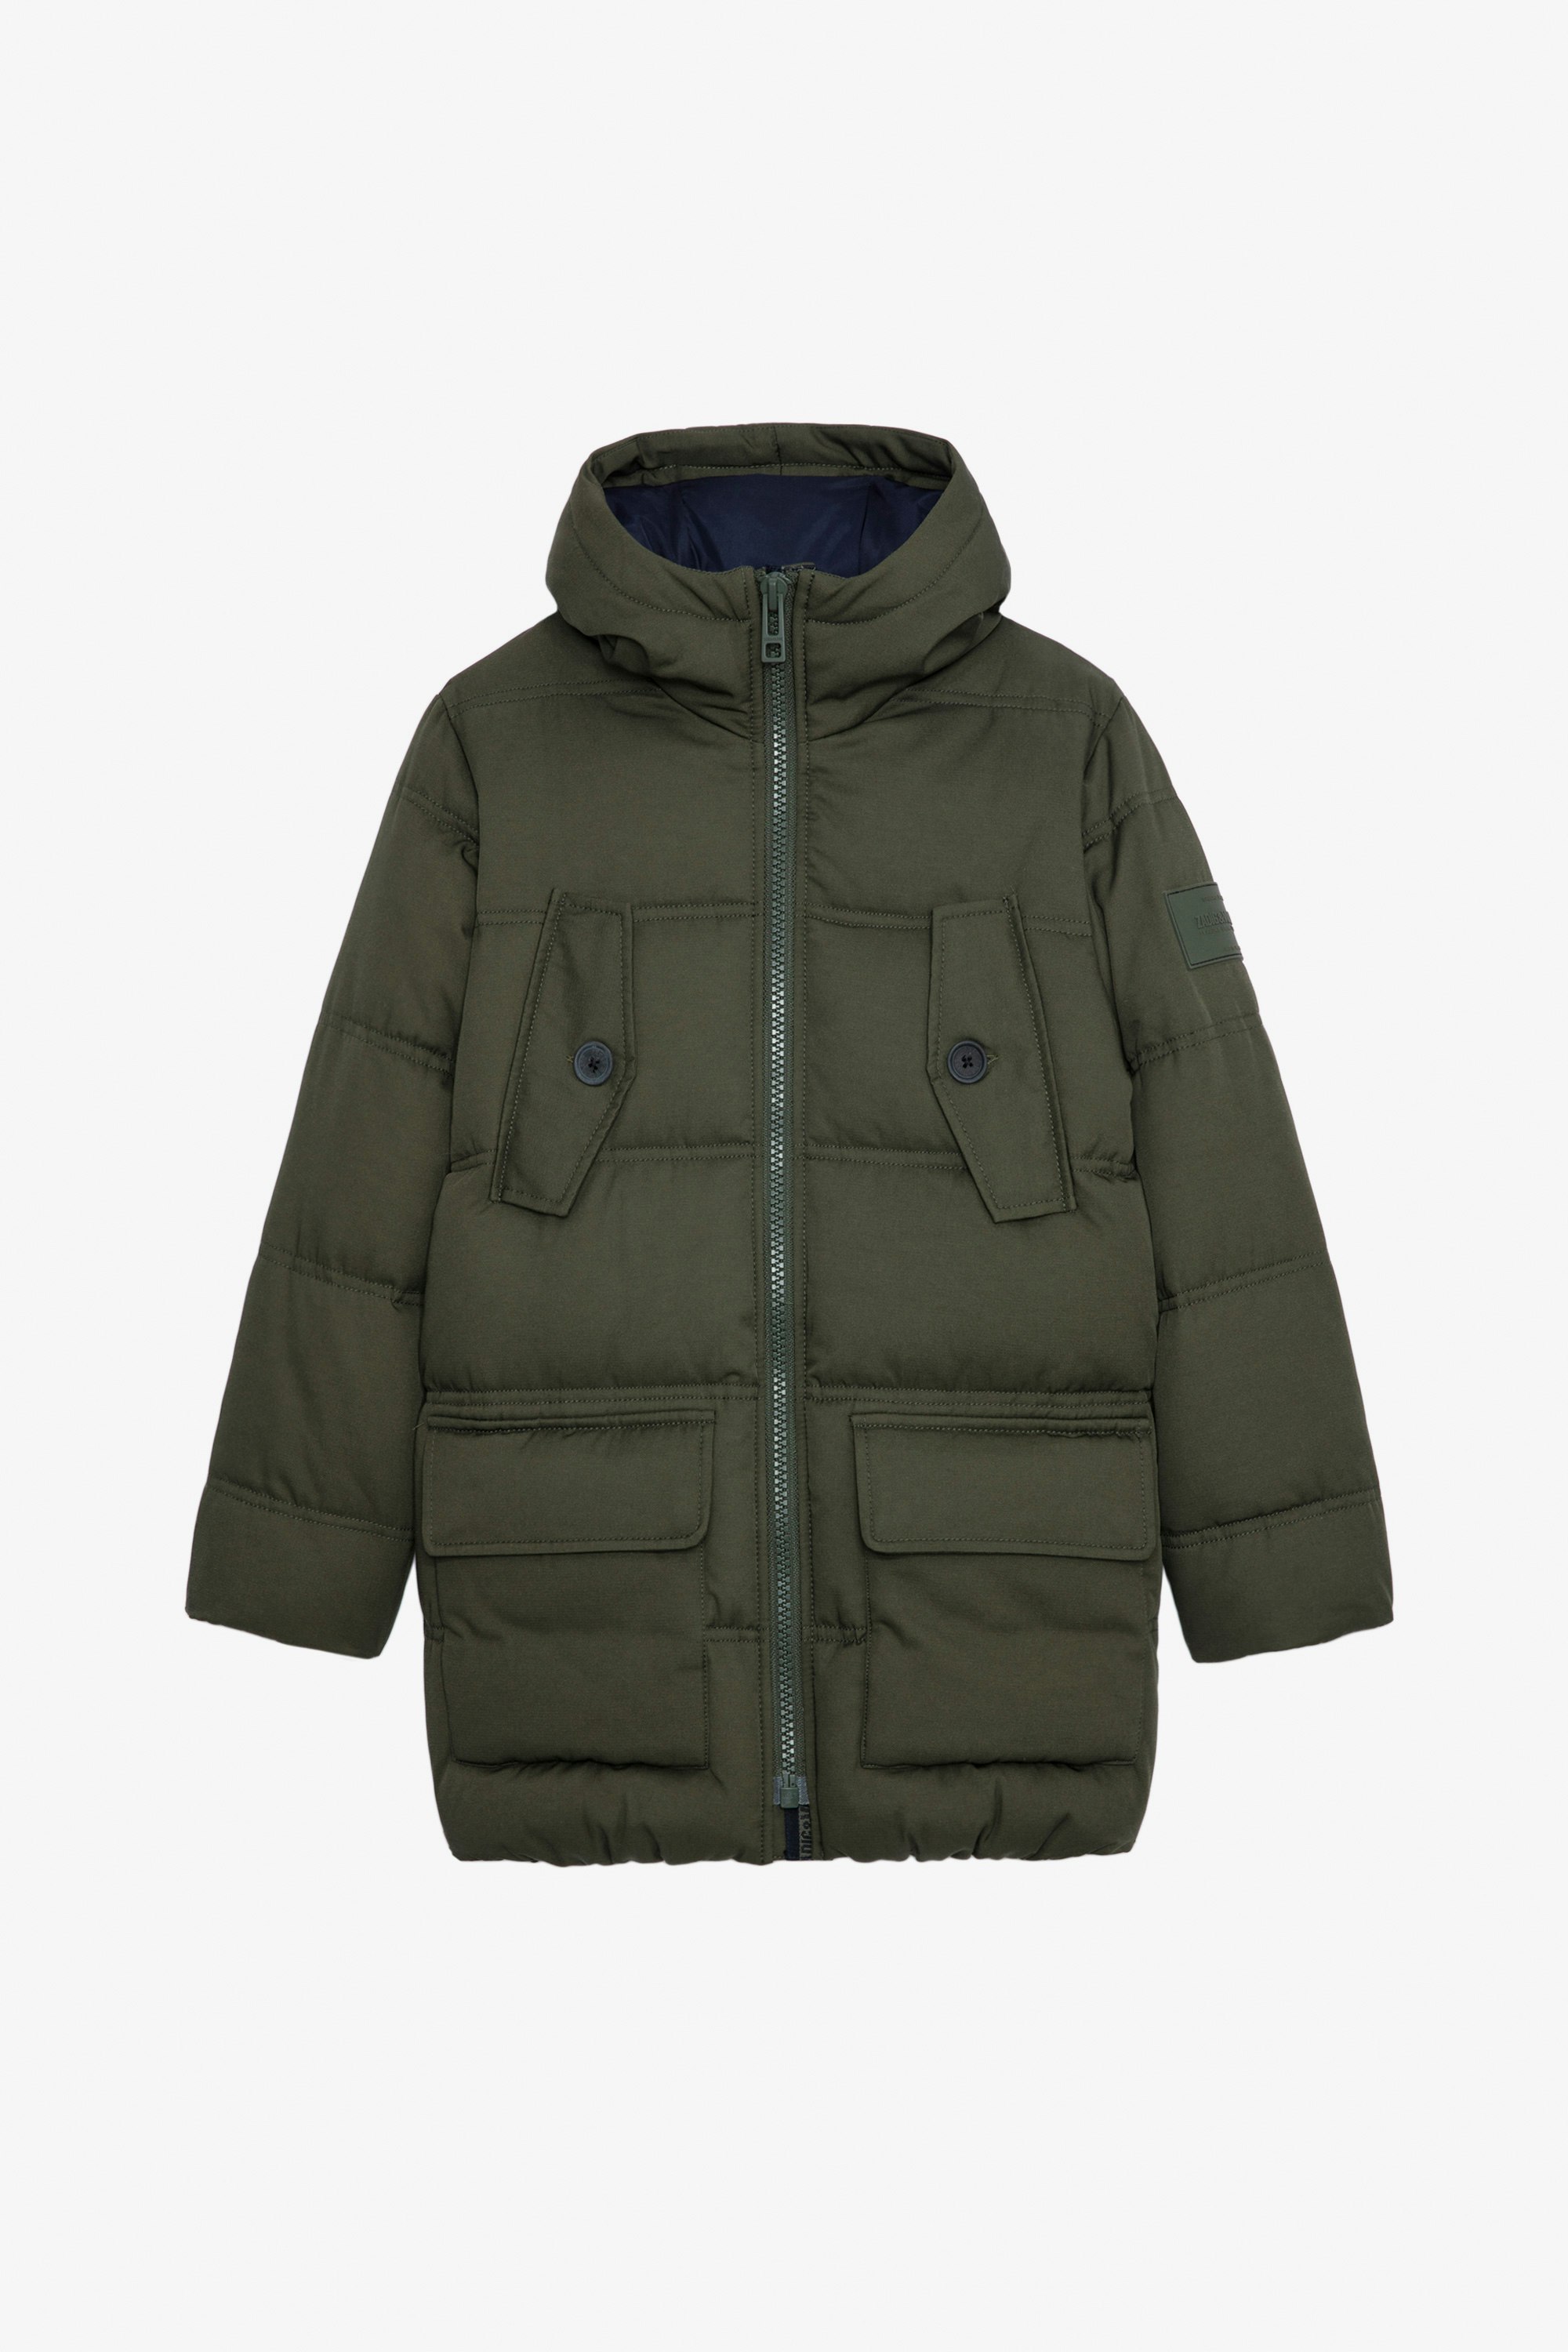 Bow Boys’ Puffer Coat - Boys’ khaki water-repellent hooded puffer coat.